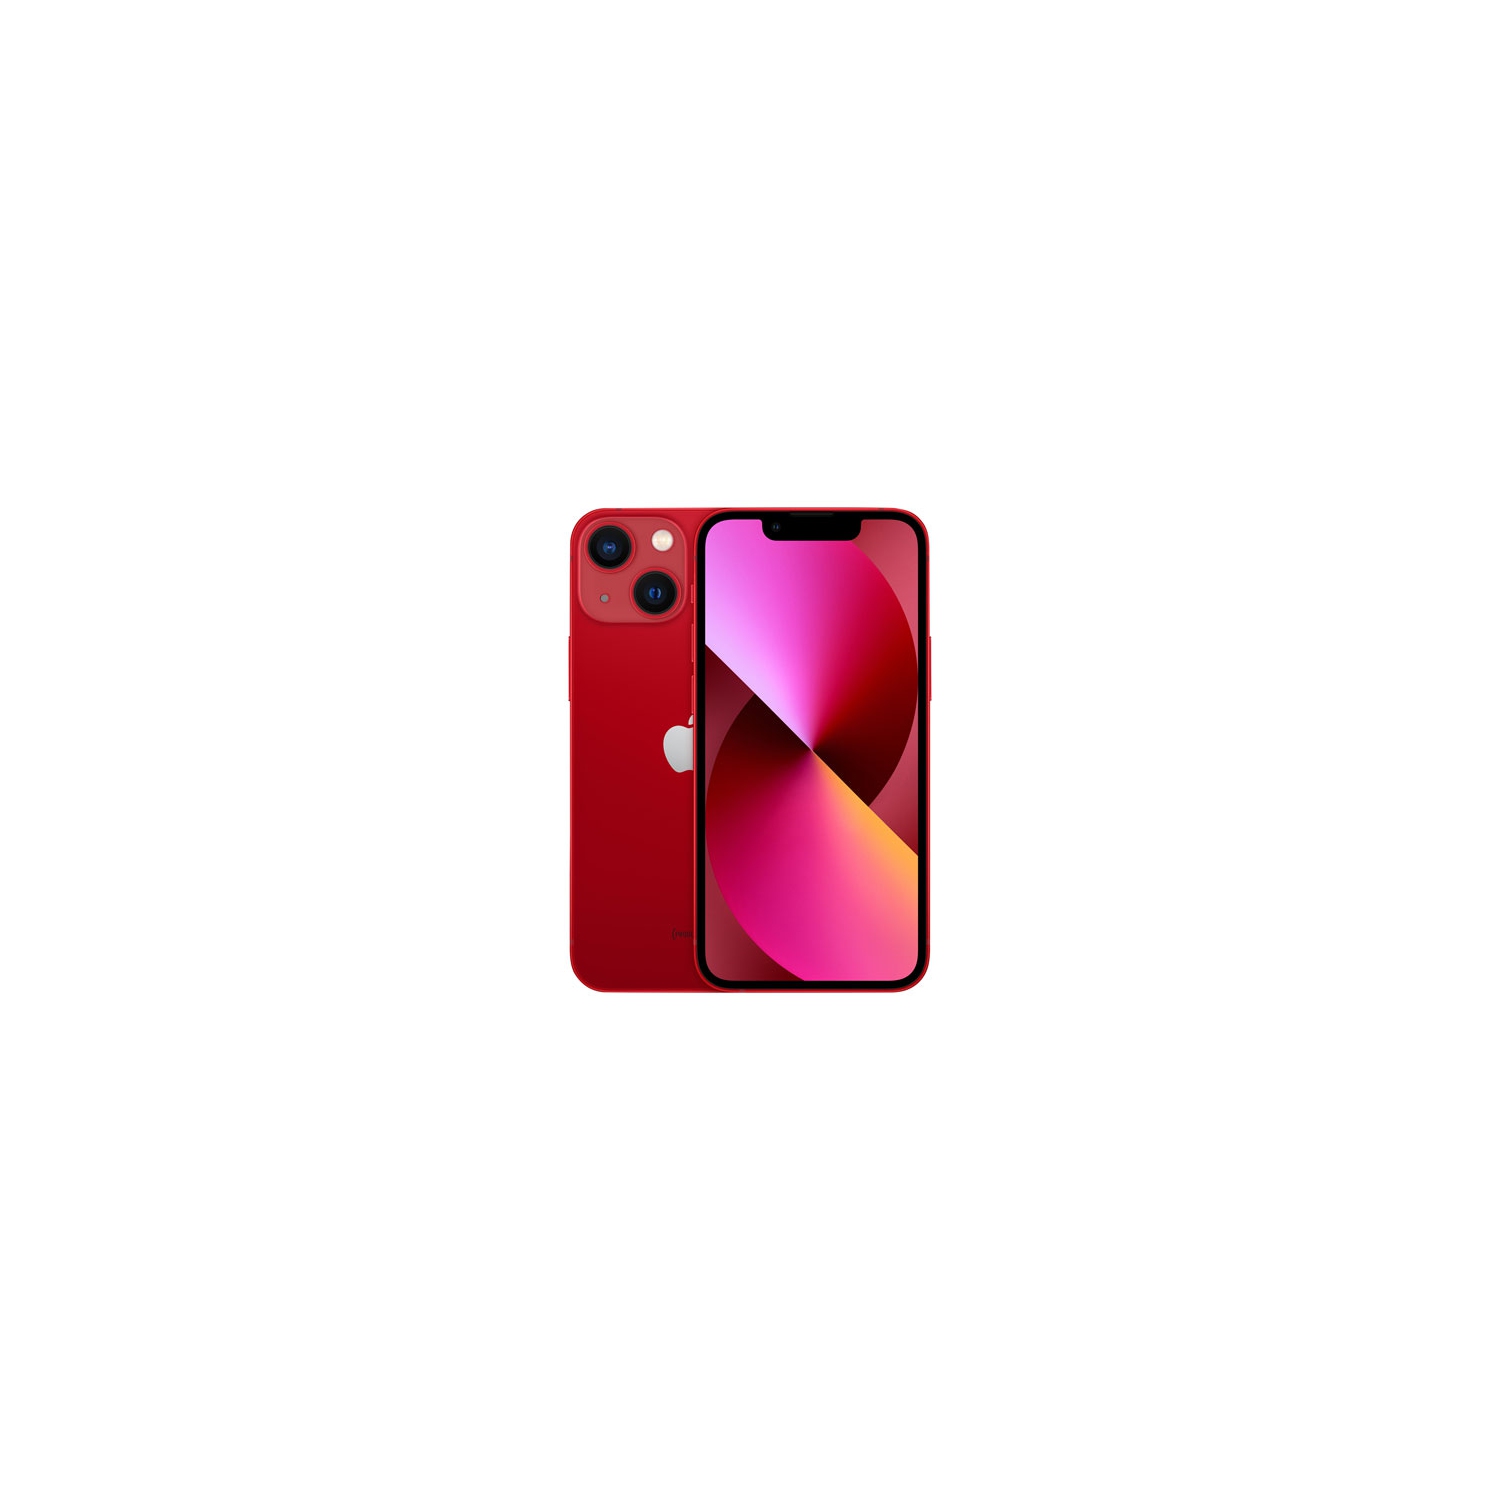 Apple iPhone 13 mini 128GB - (Product) Red - Unlocked - Open Box